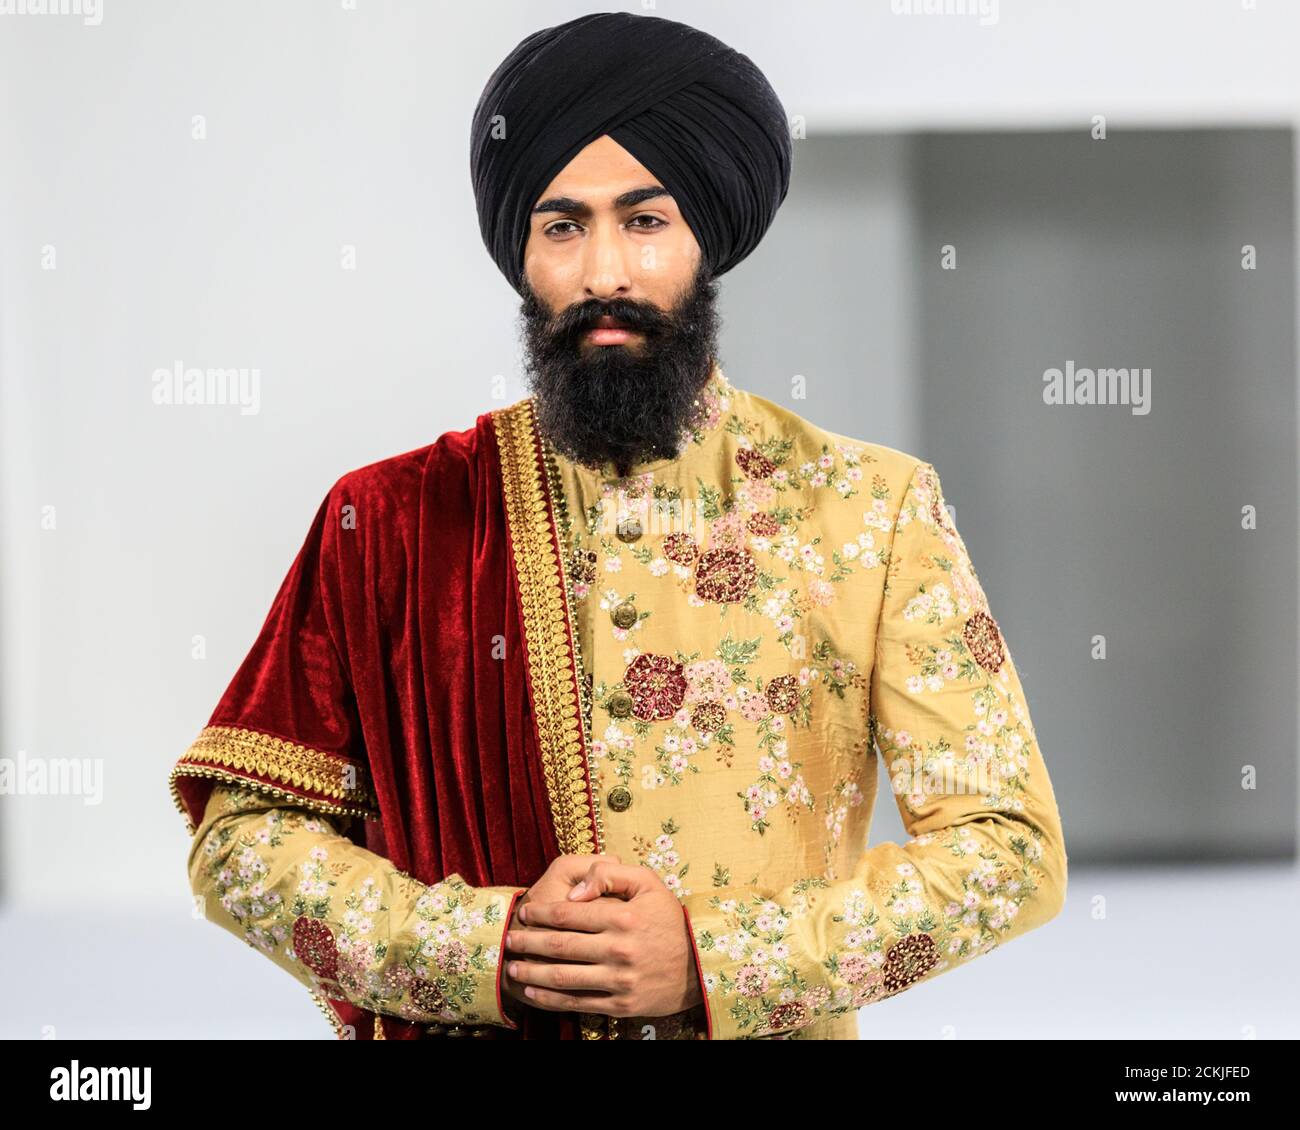 sikh-asian-male-model-groom-in-gold-coloured-wedding-suit-national-asian-wedding-show-fashion-runway-london-2CKJFED.jpg